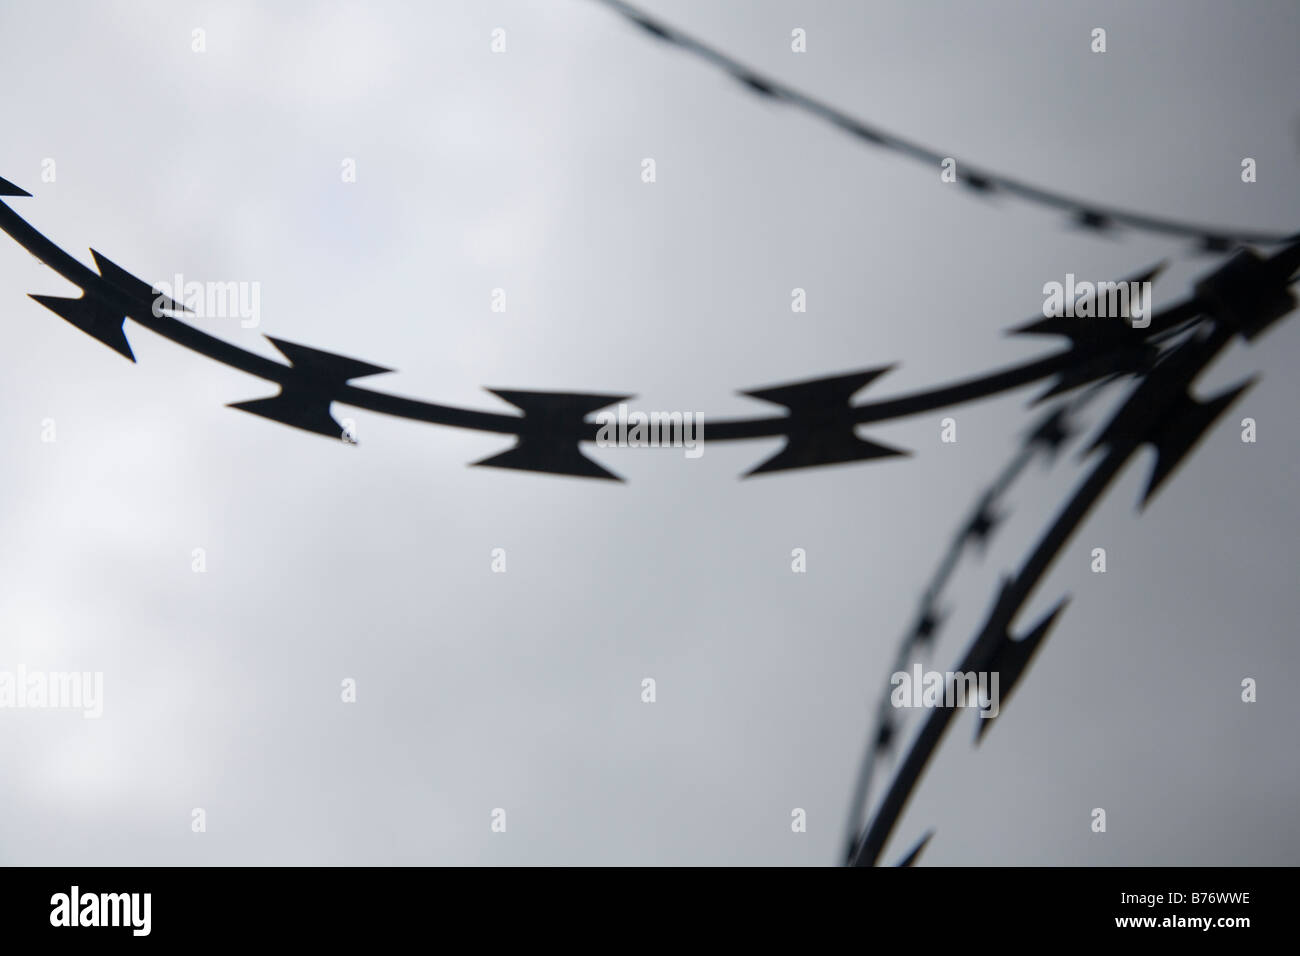 Razor wire against a grey cloudy sky Stock Photo